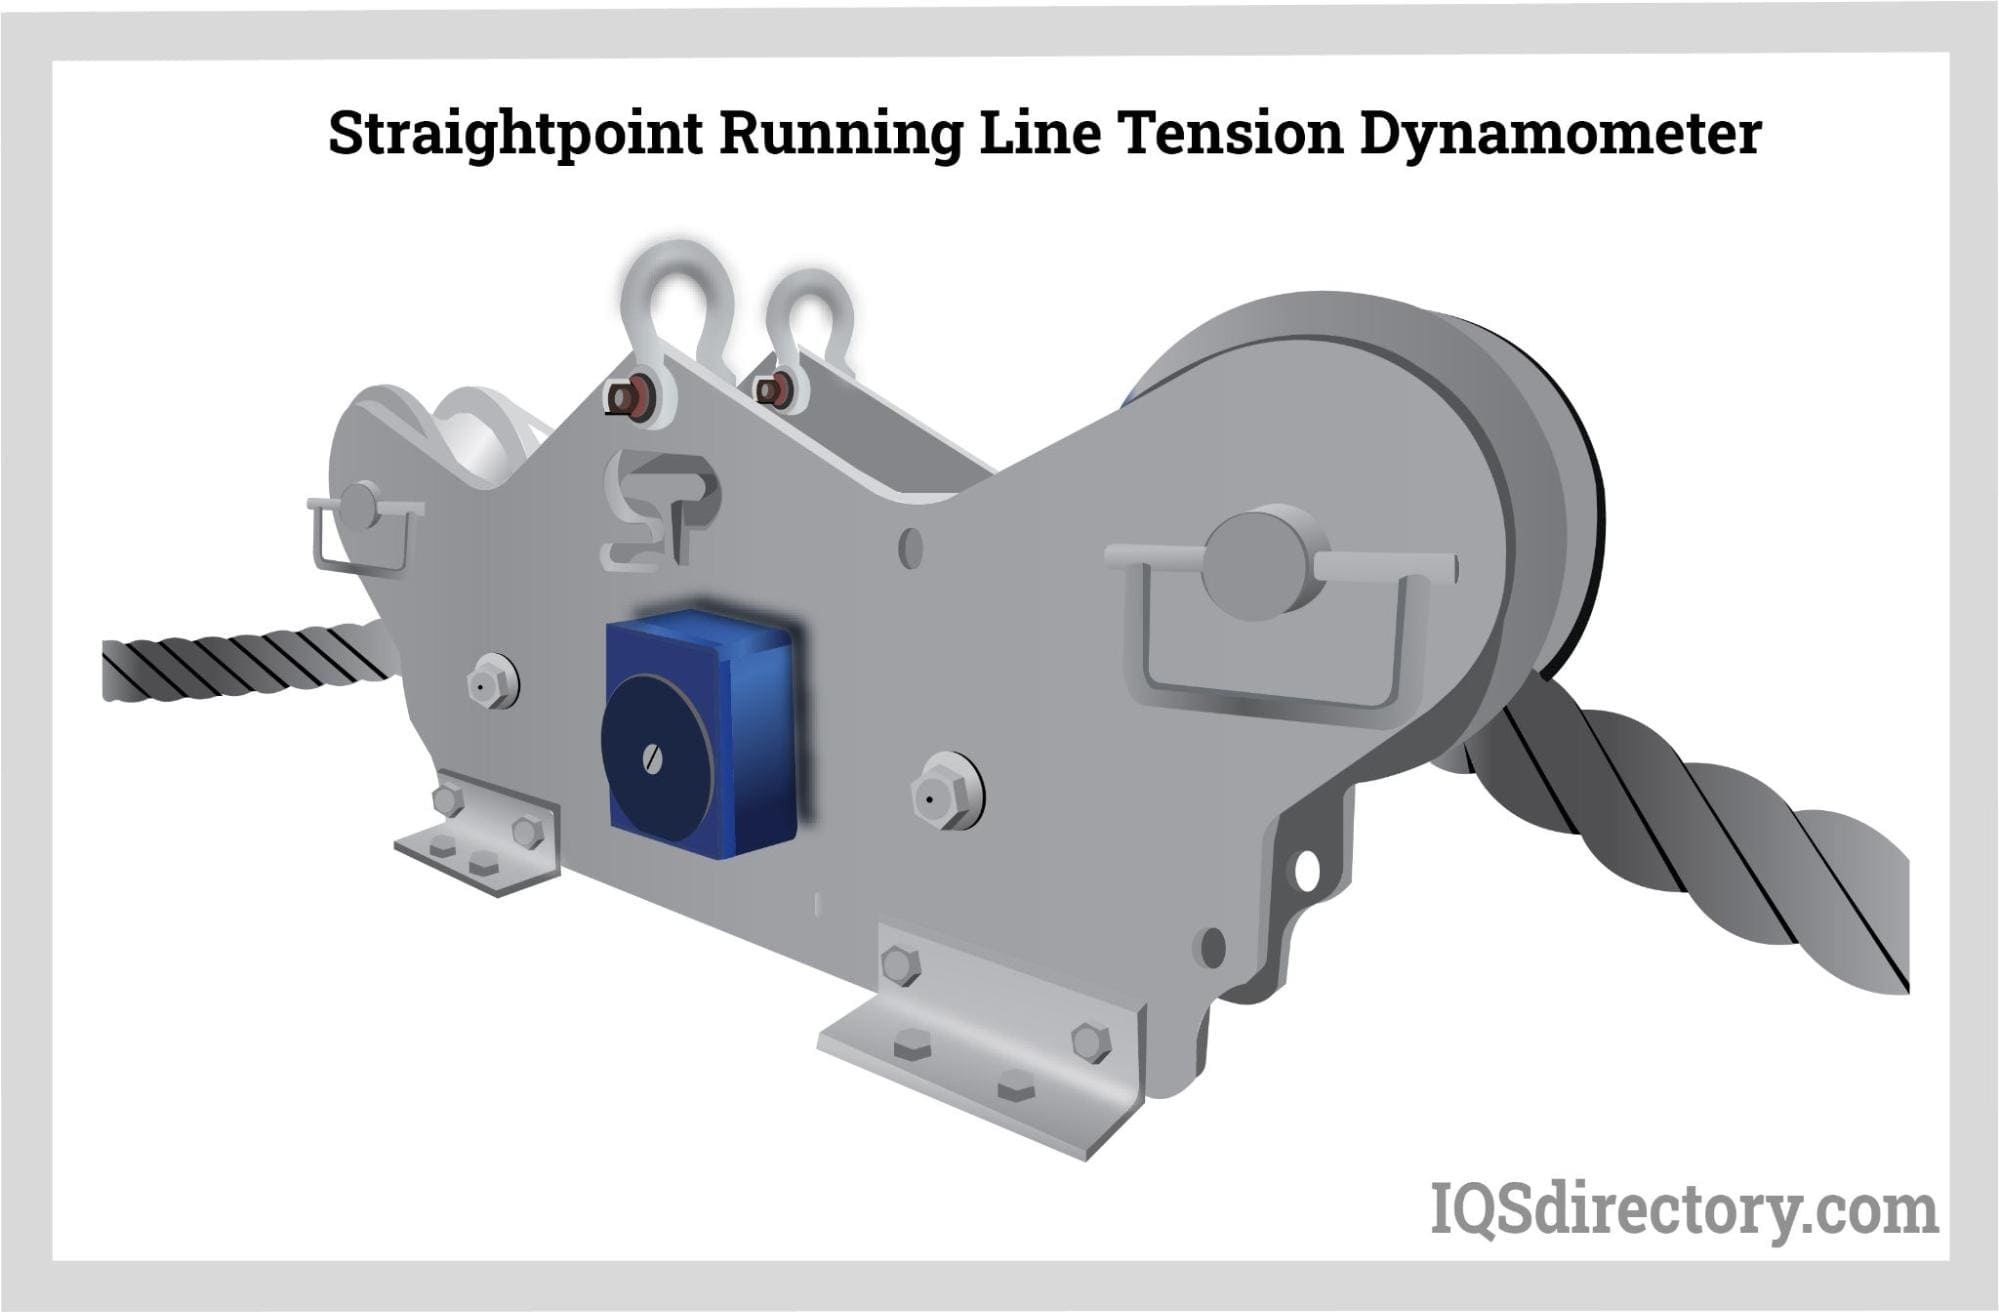 Straightpoint Running Line Tension Dynamometer